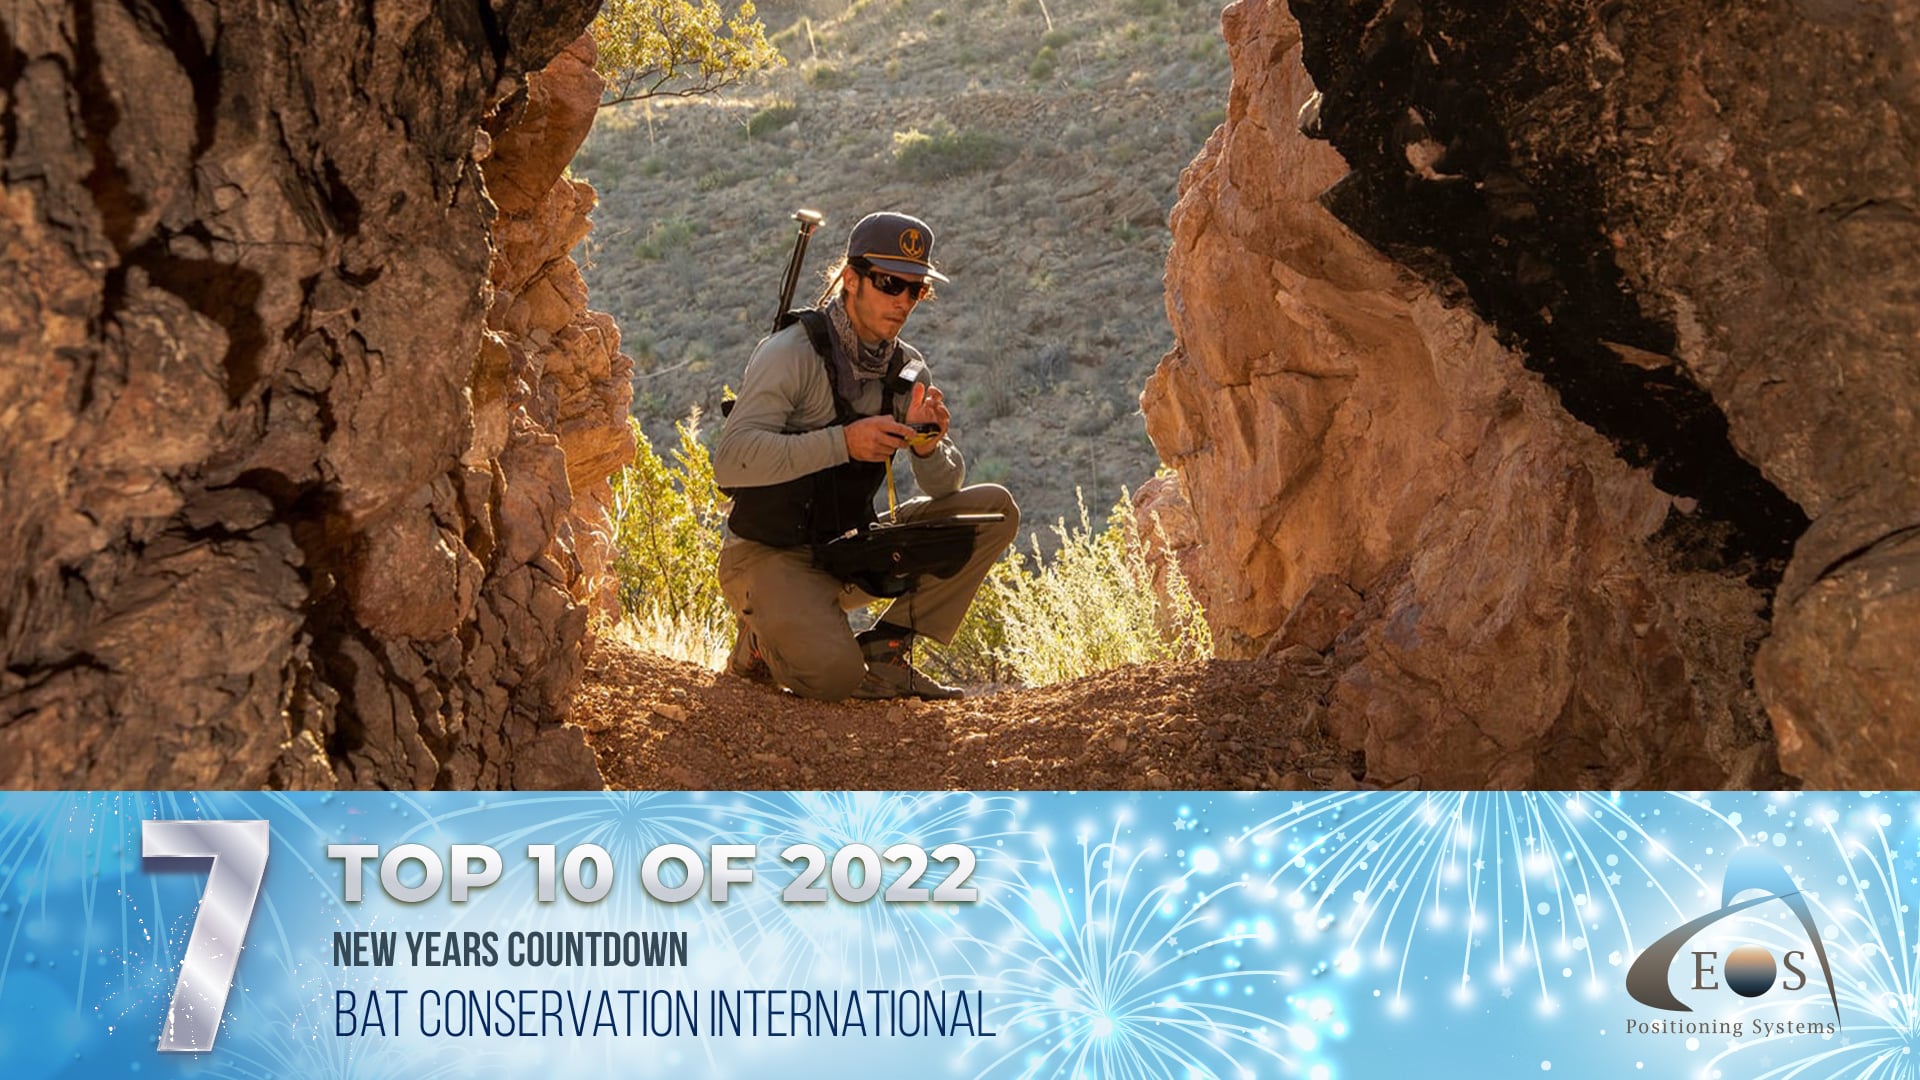 7 Bat Conservation International - Top 10 of 2022